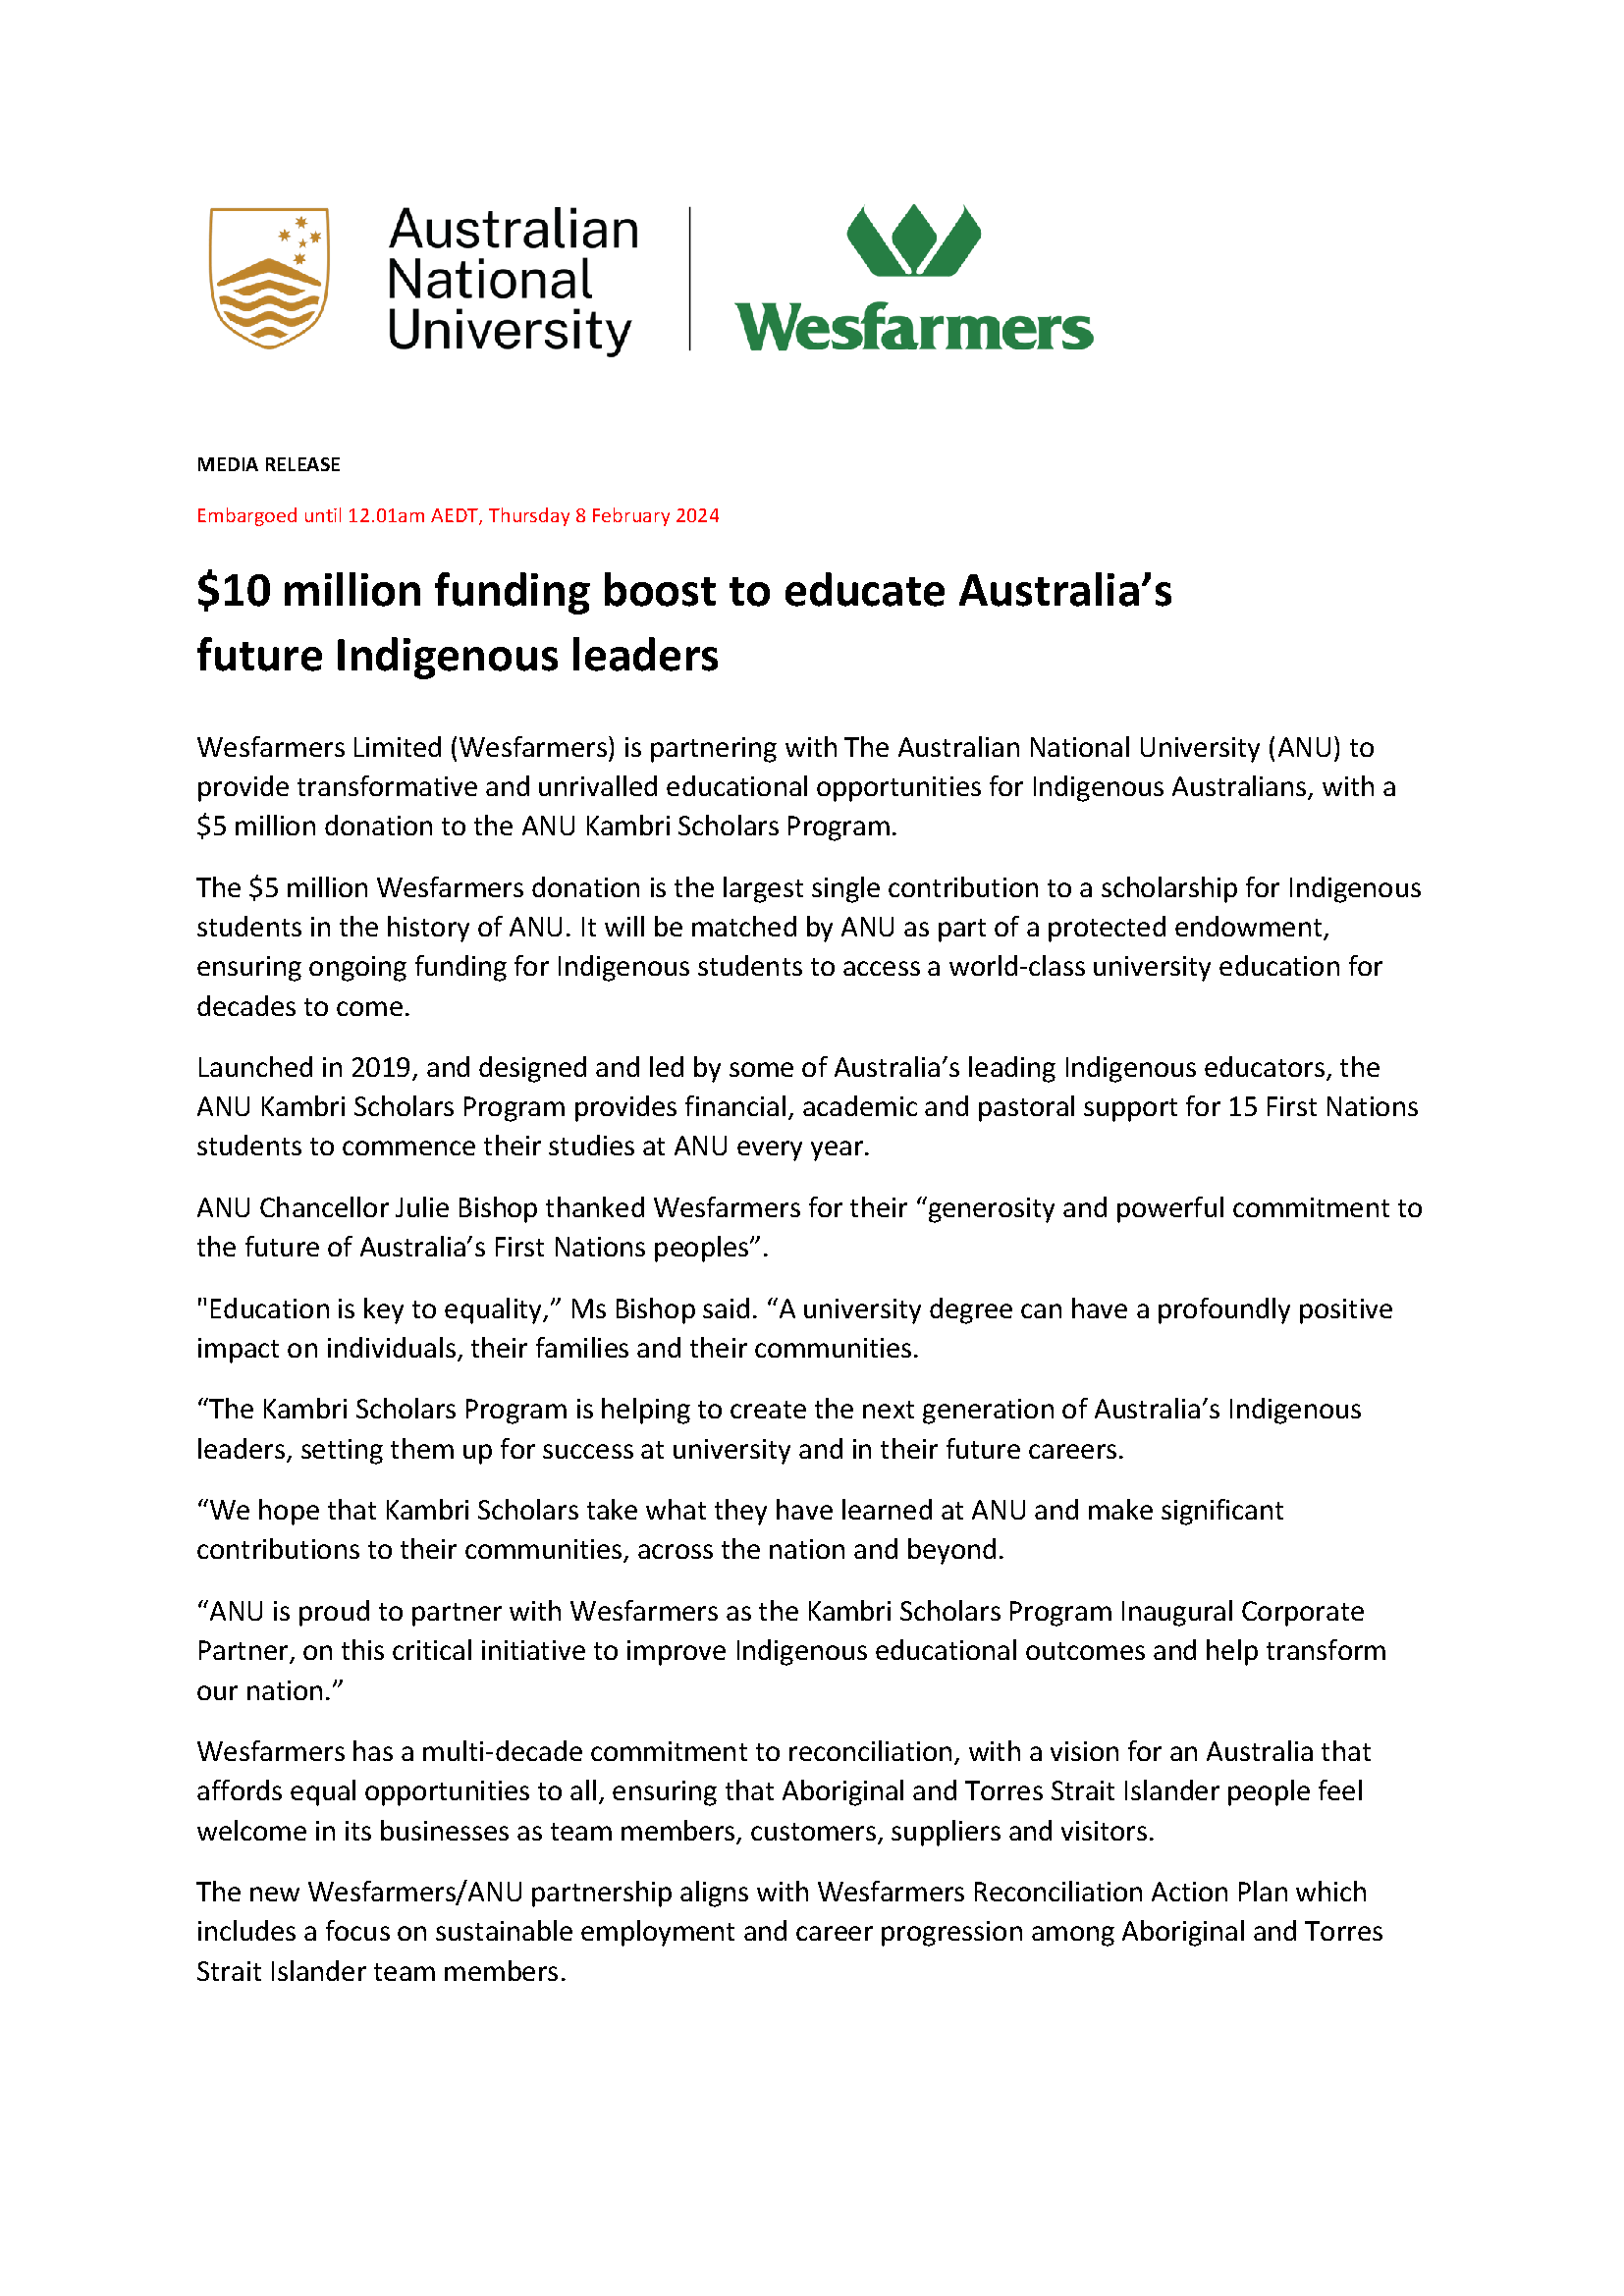 $10 million funding boost to educate Australia’s future Indigenous leaders